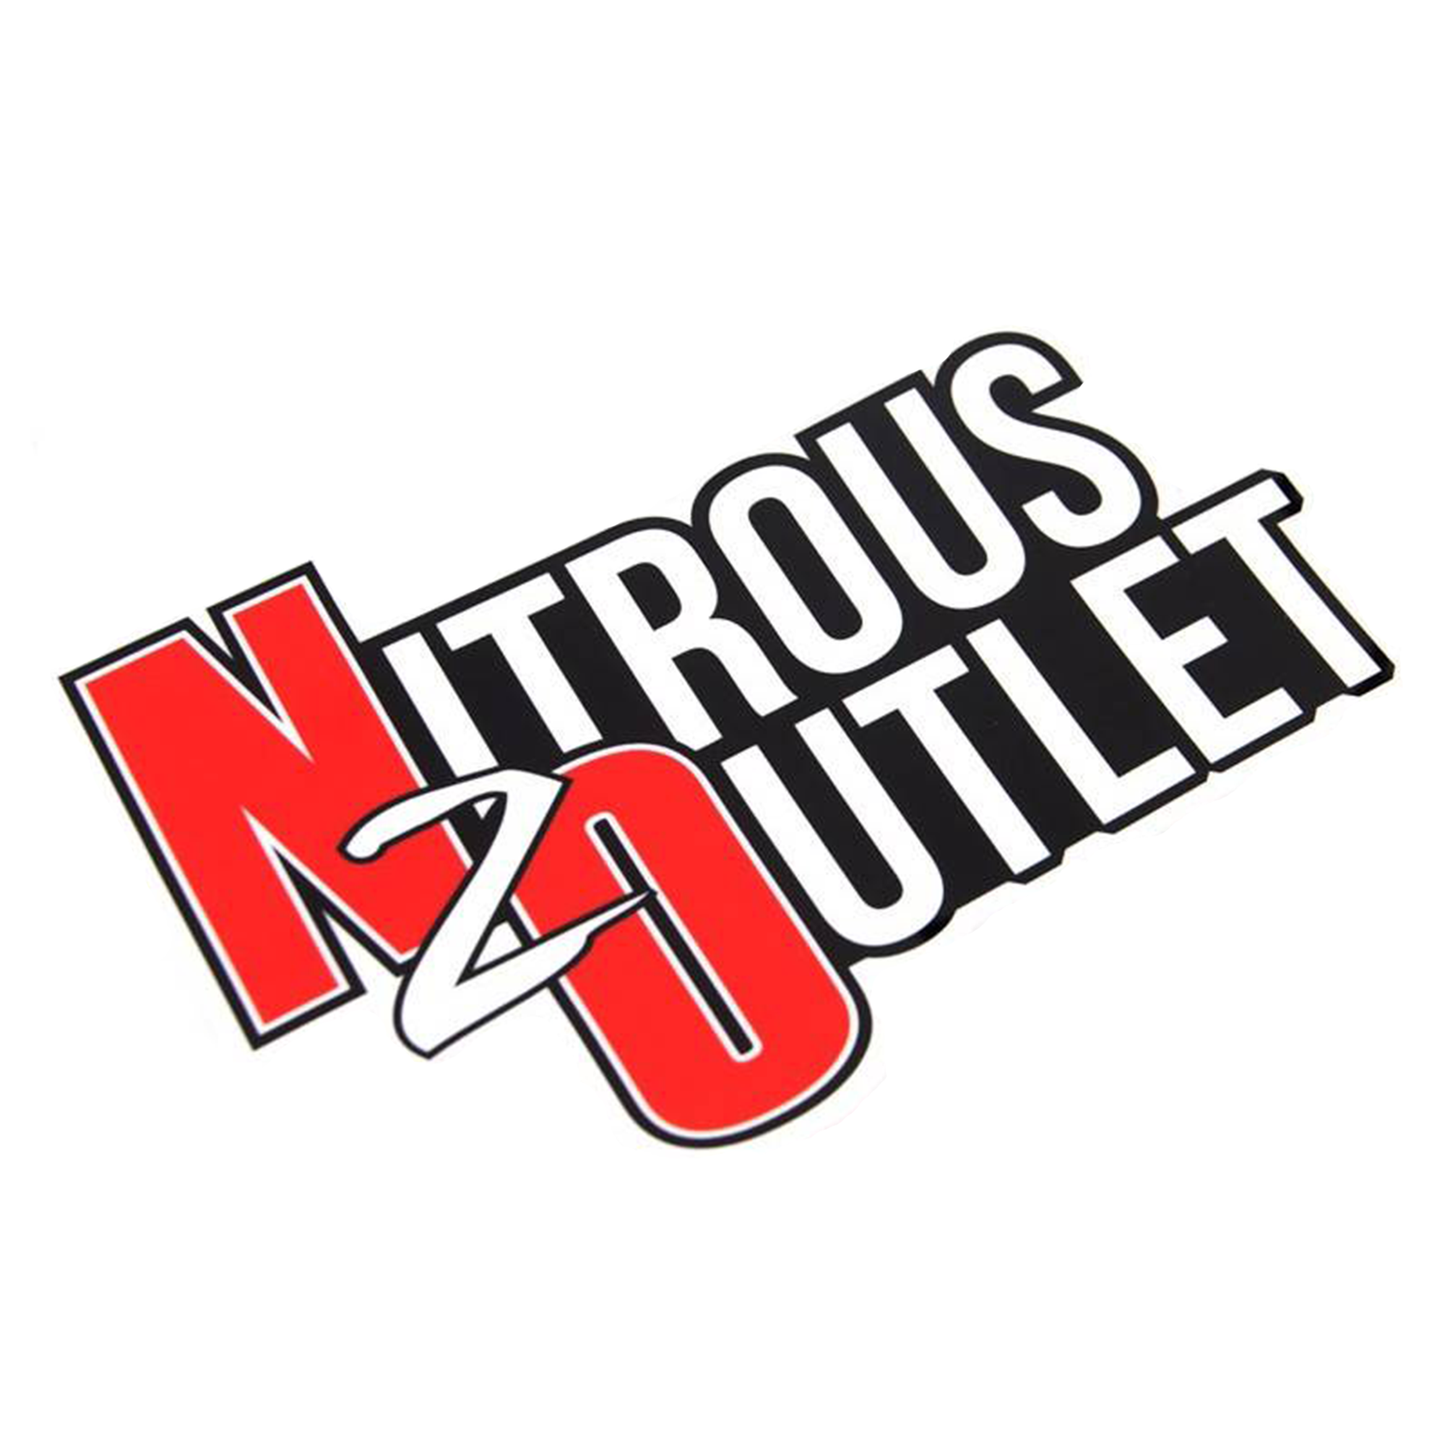 Nitrous Outlet Contour Cut Sticker (Medium 8X6) *Free Shipping*